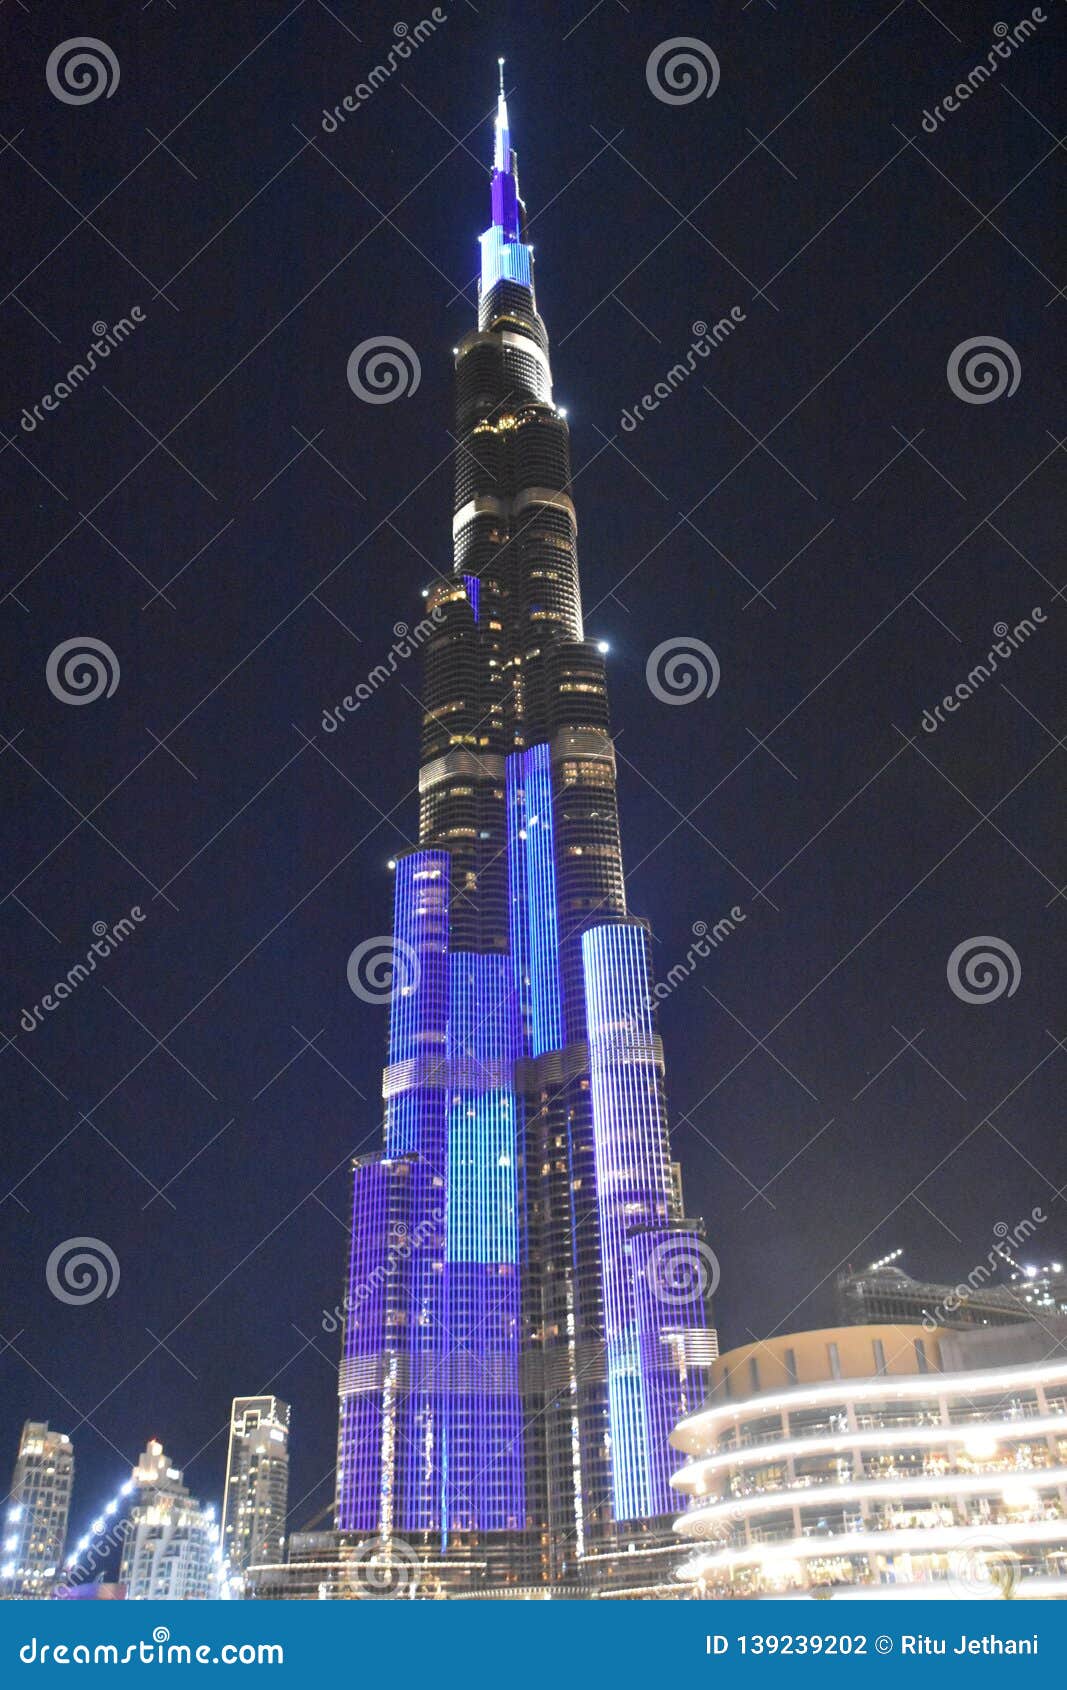 Best Led Lights Suppliers  Lighting Company In Dubai Uae